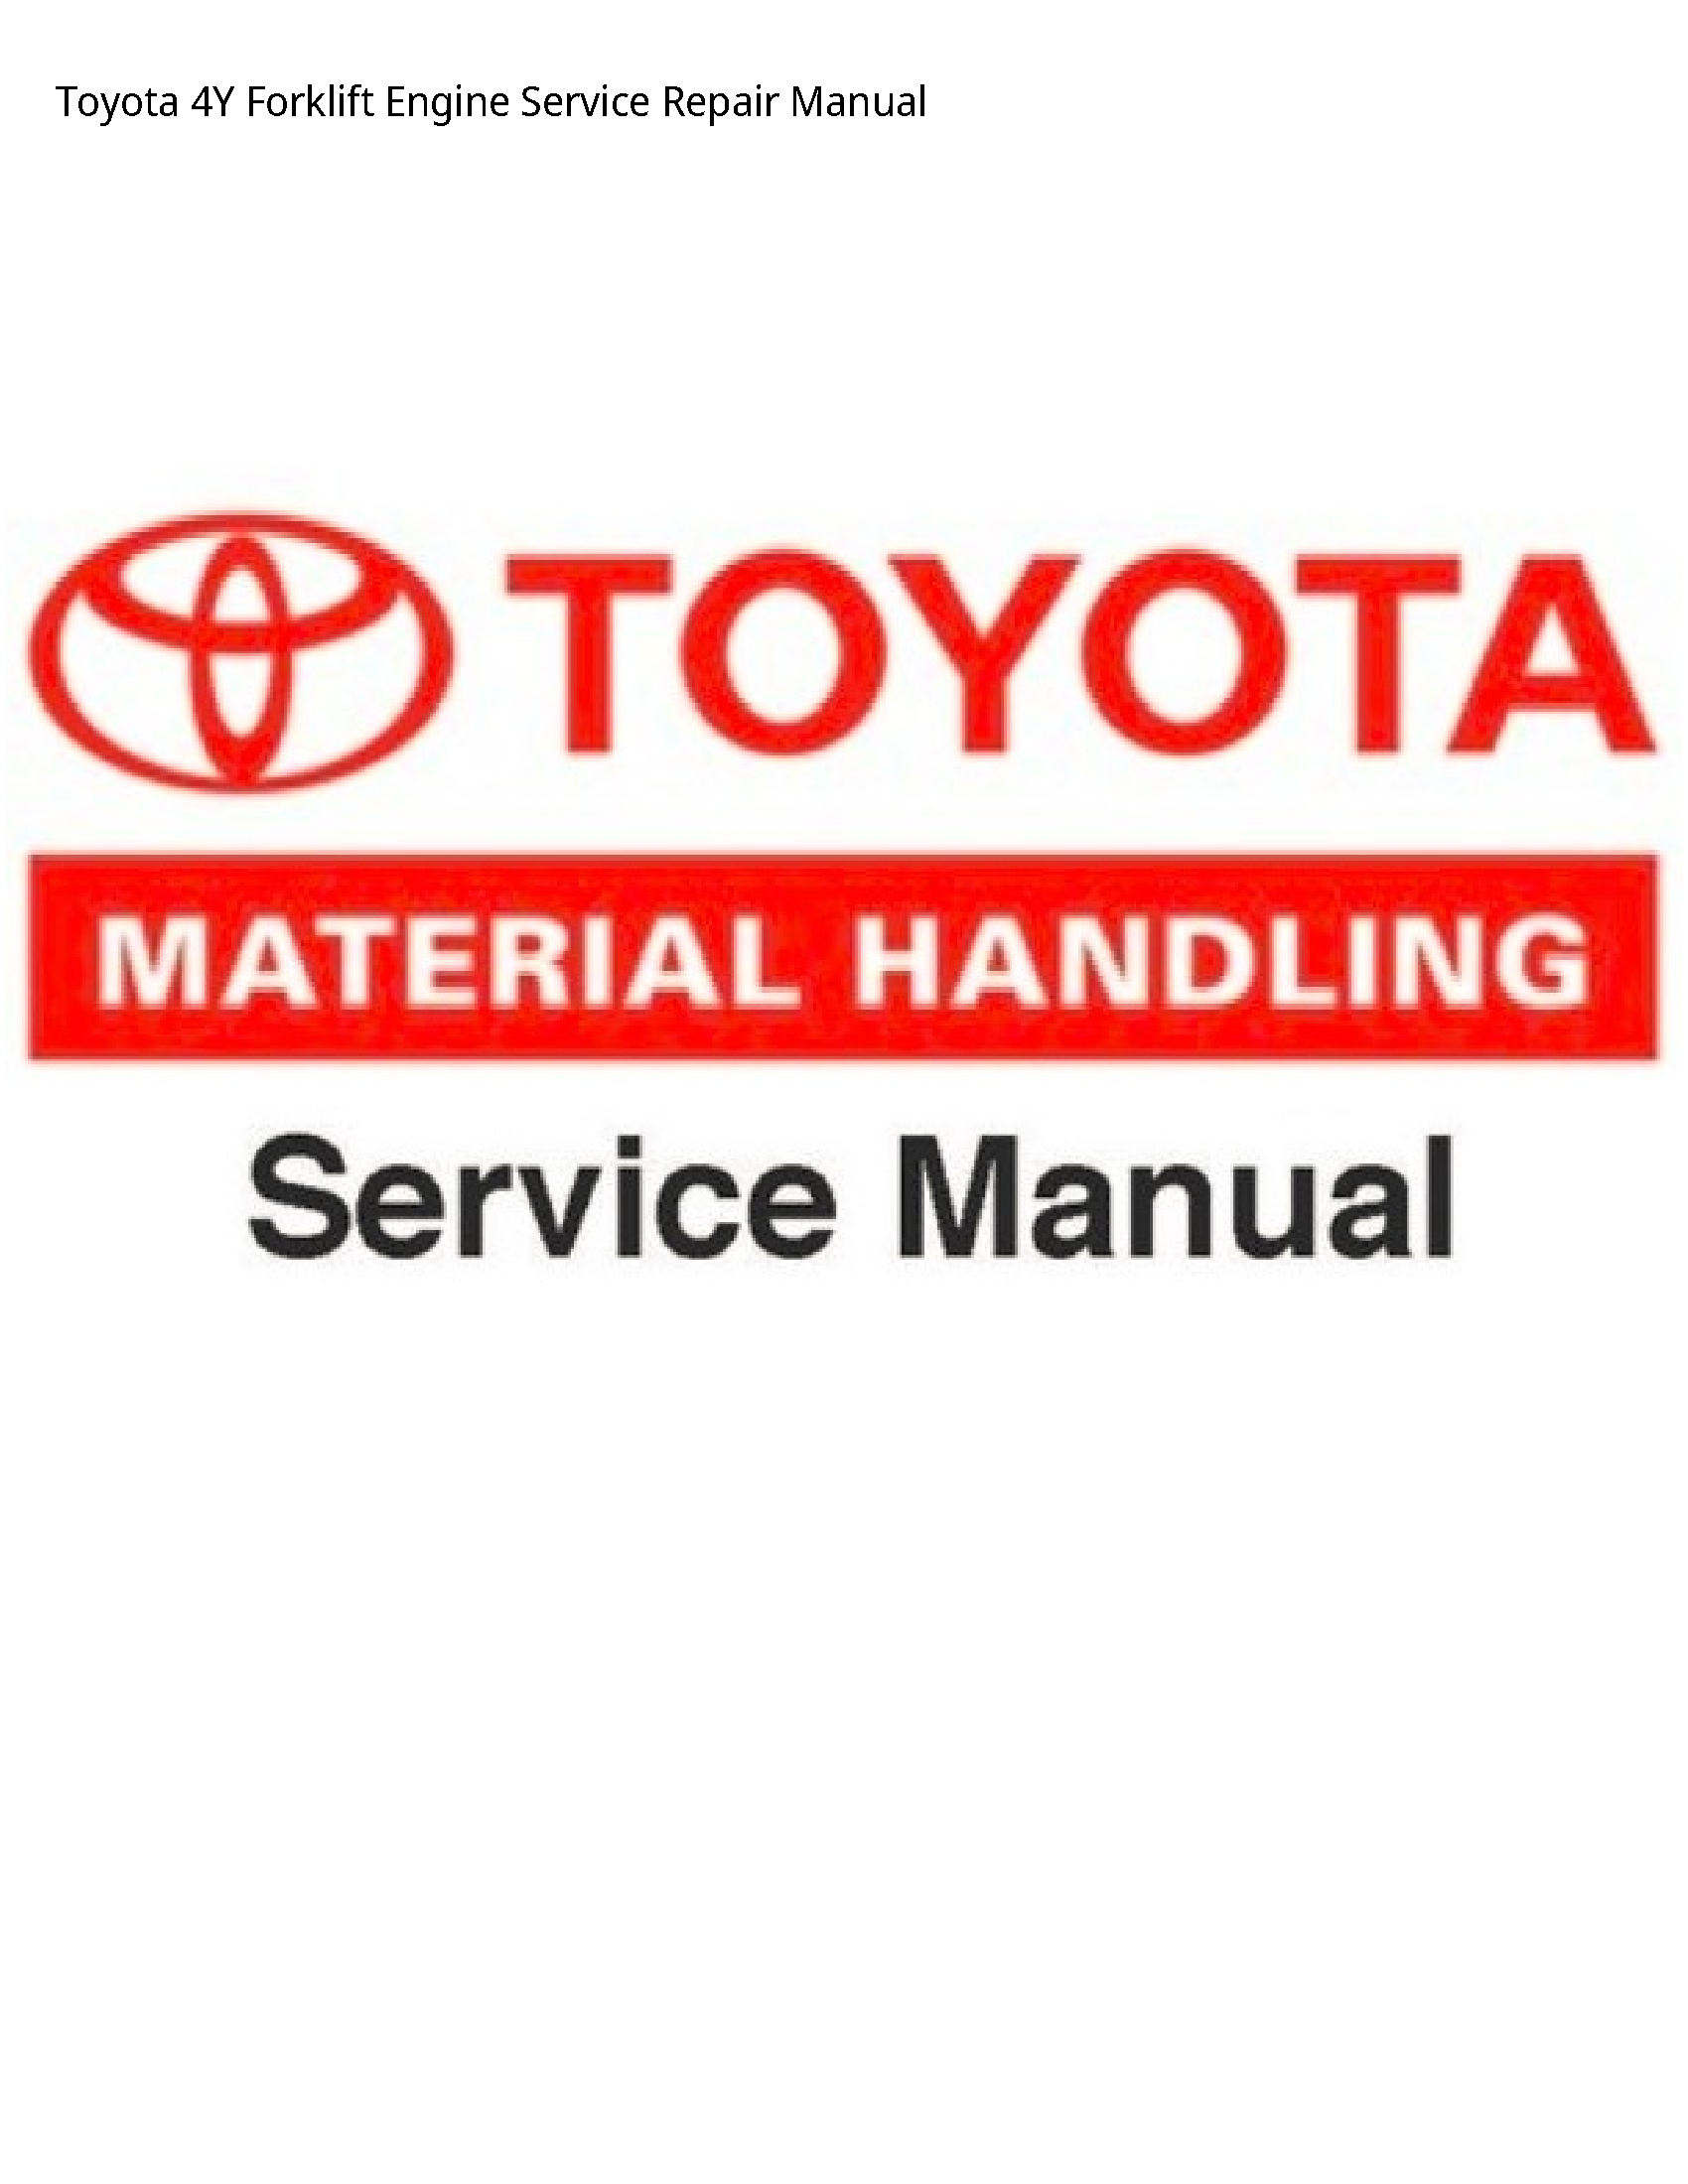 Toyota 4Y Forklift Engine manual